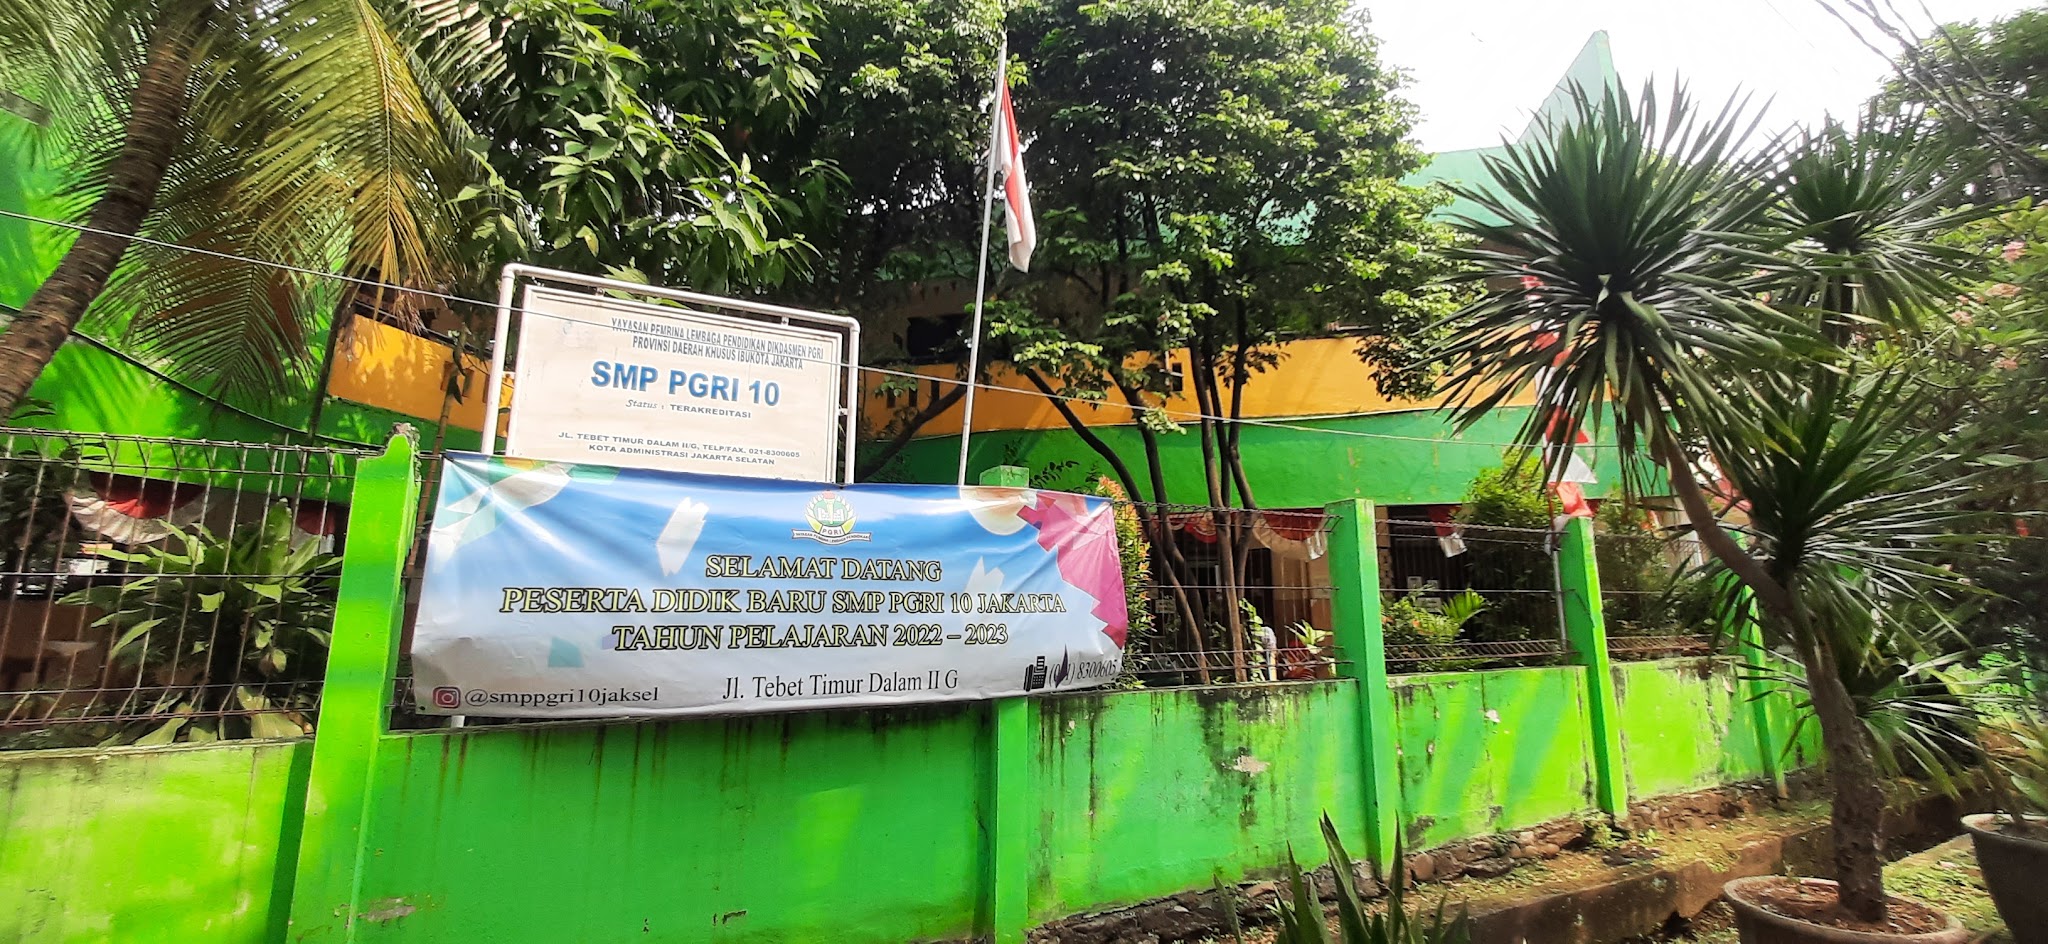 Foto SMP  Pgri 10, Kota Jakarta Selatan